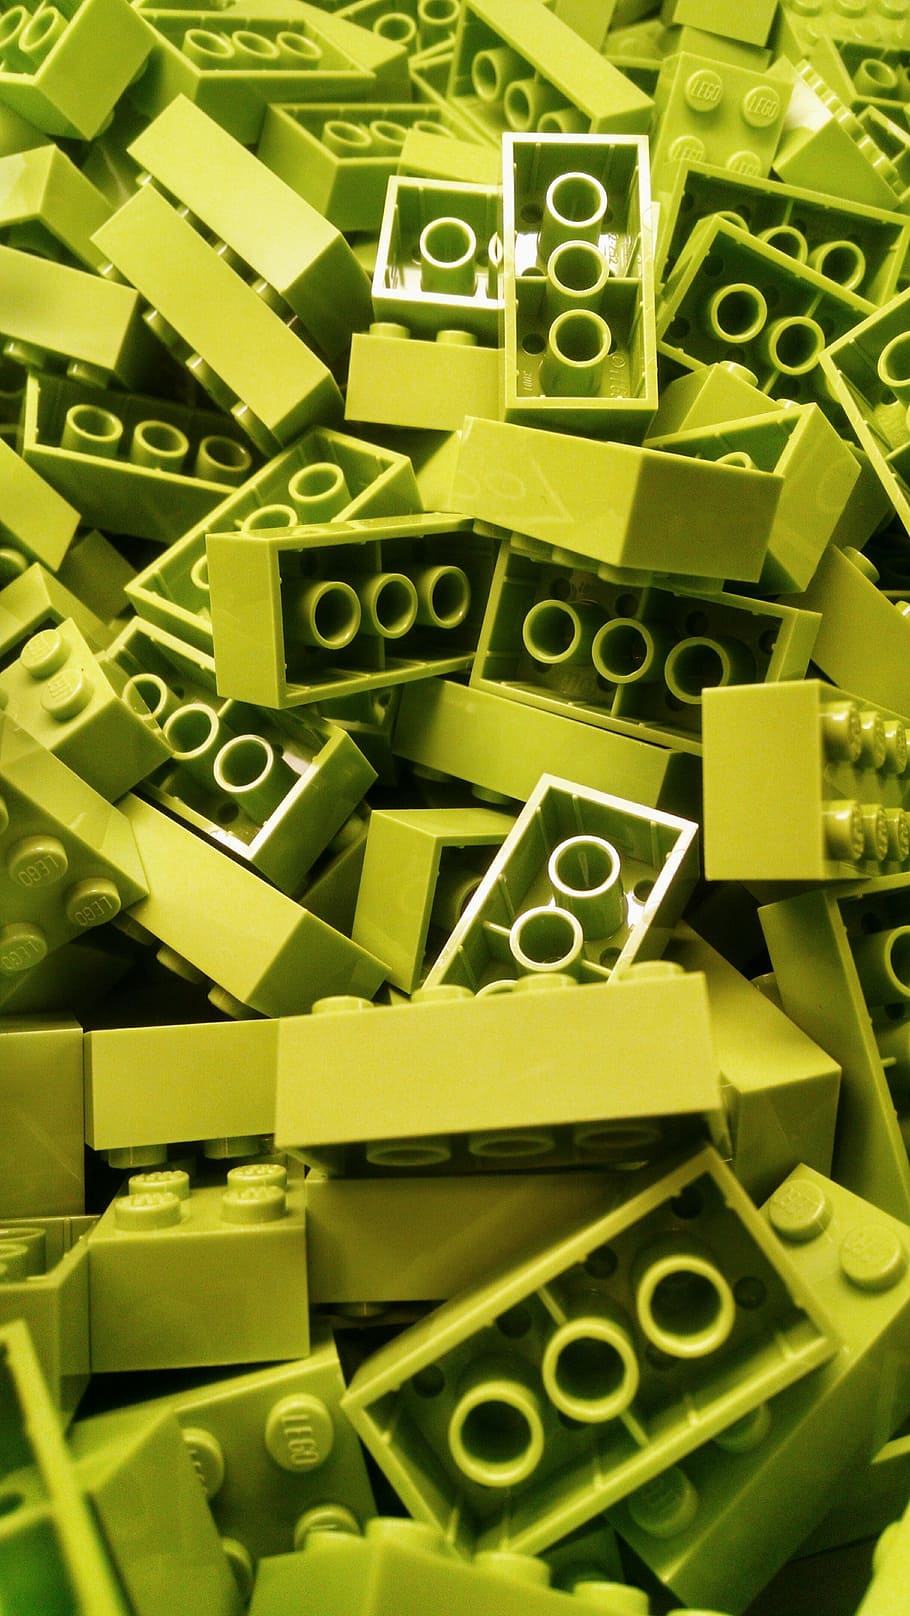 green, building block lot, lego, building block, blocks, colorful, color, brick, fun, toy